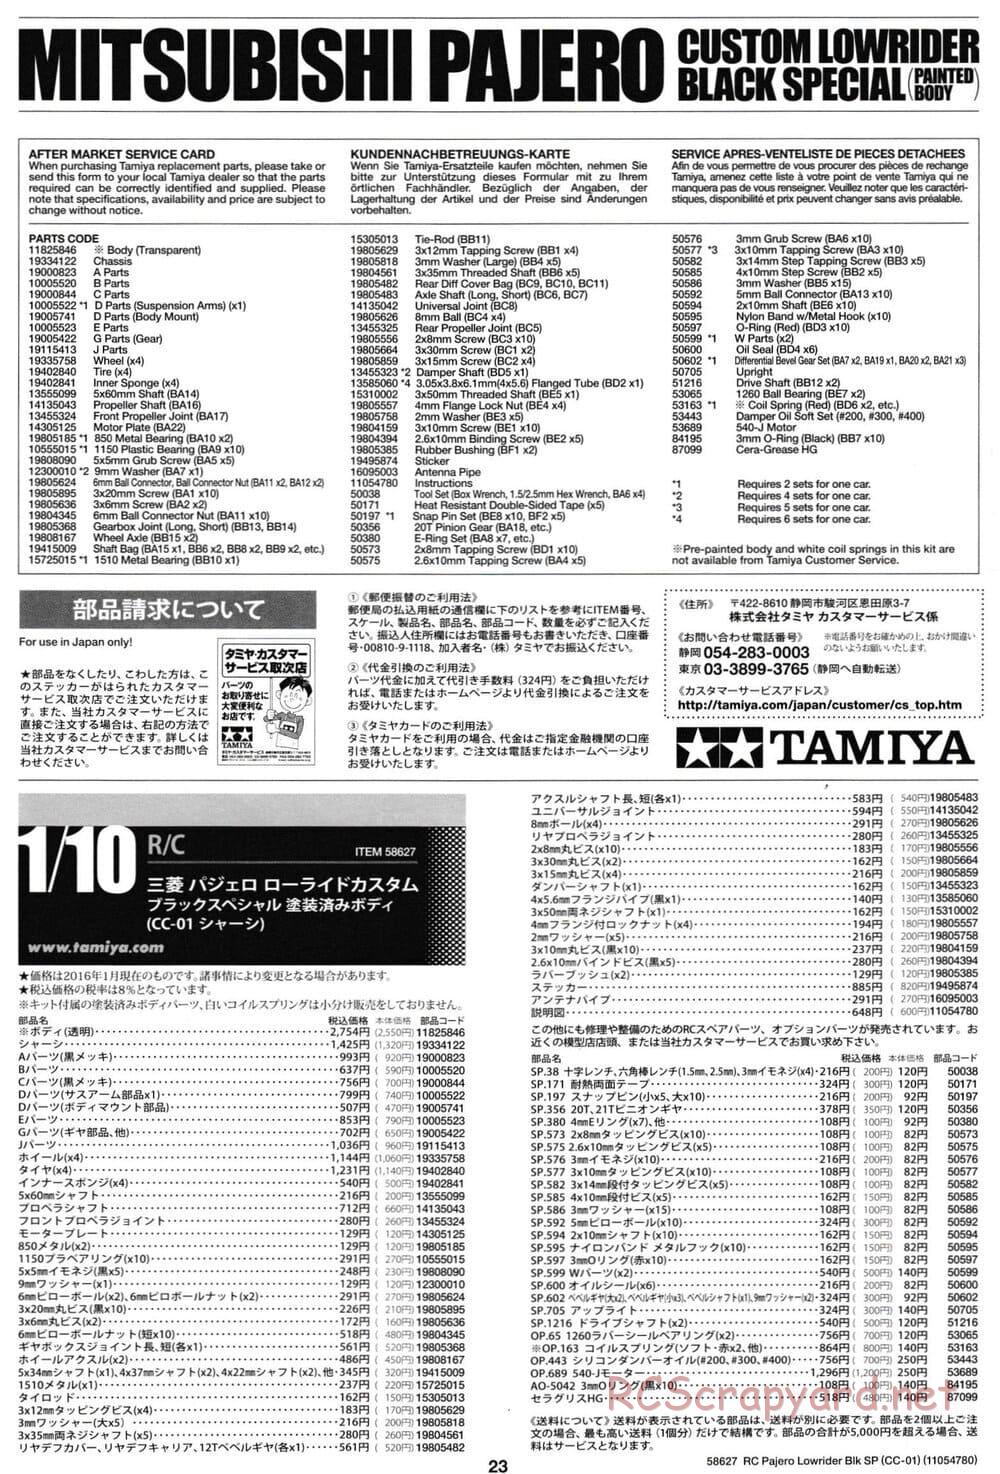 Tamiya - Mitsubishi Pajero Custom Lowrider Black Special - CC-01 Chassis - Manual - Page 23